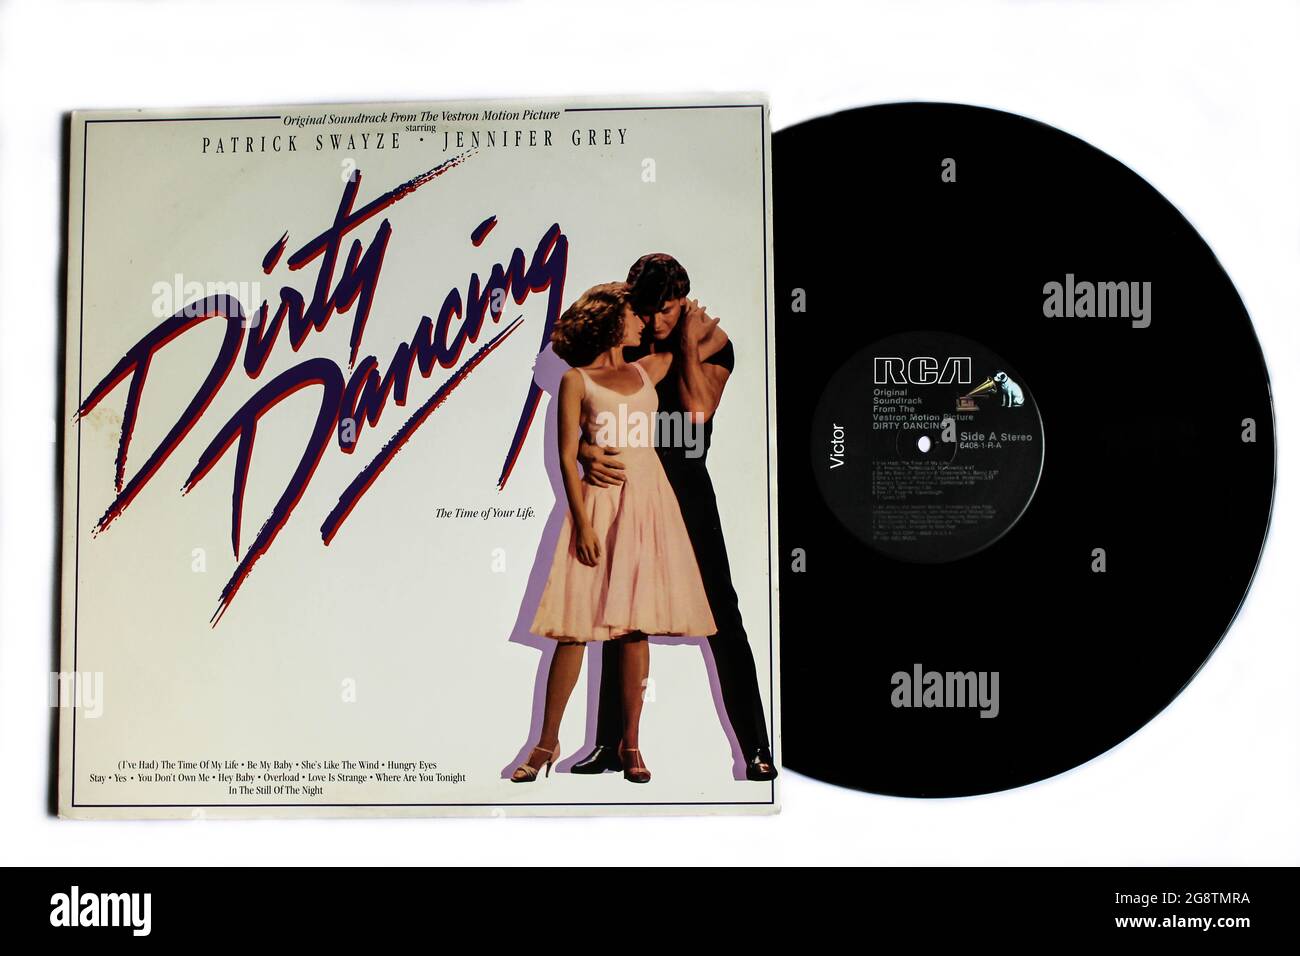 Dirty Dancing: Original-Soundtrack aus dem Vestron Motion Picture. Musikalbum auf Vinyl-Schallplatte. Albumcover Stockfoto